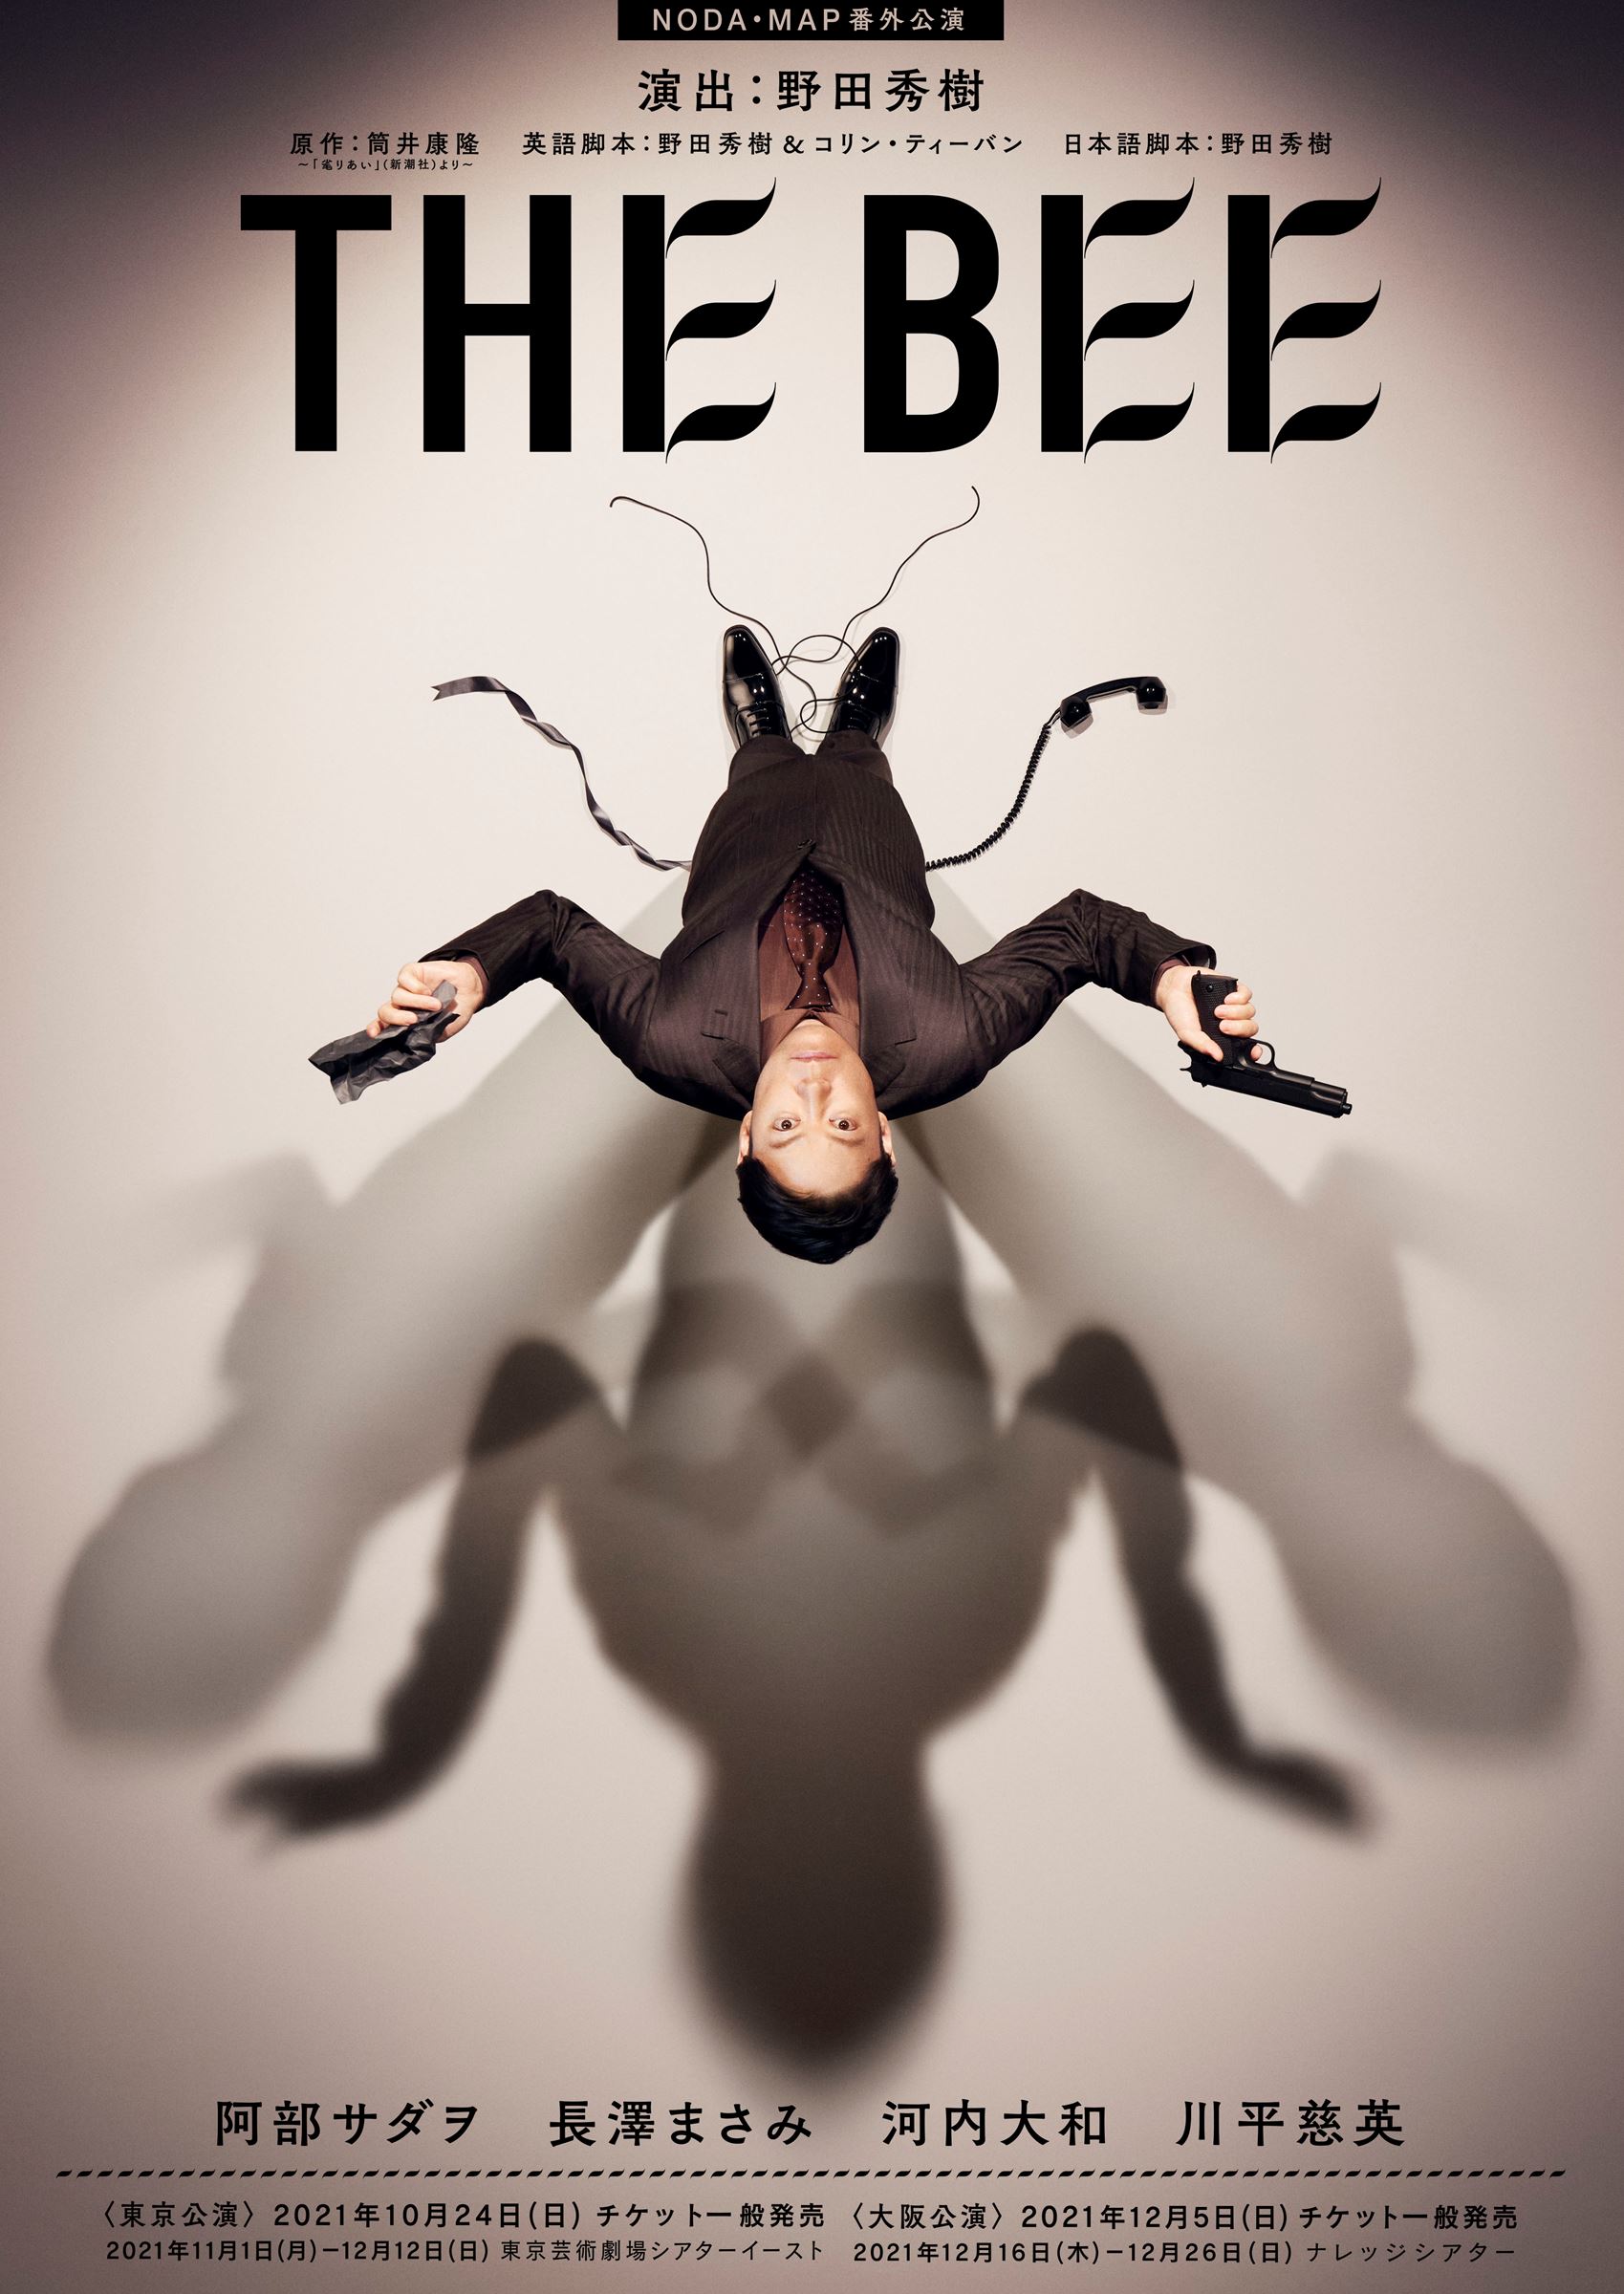 『THE BEE』メインビジュアル　中央は今回[井戸]役を演じる阿部サダヲ